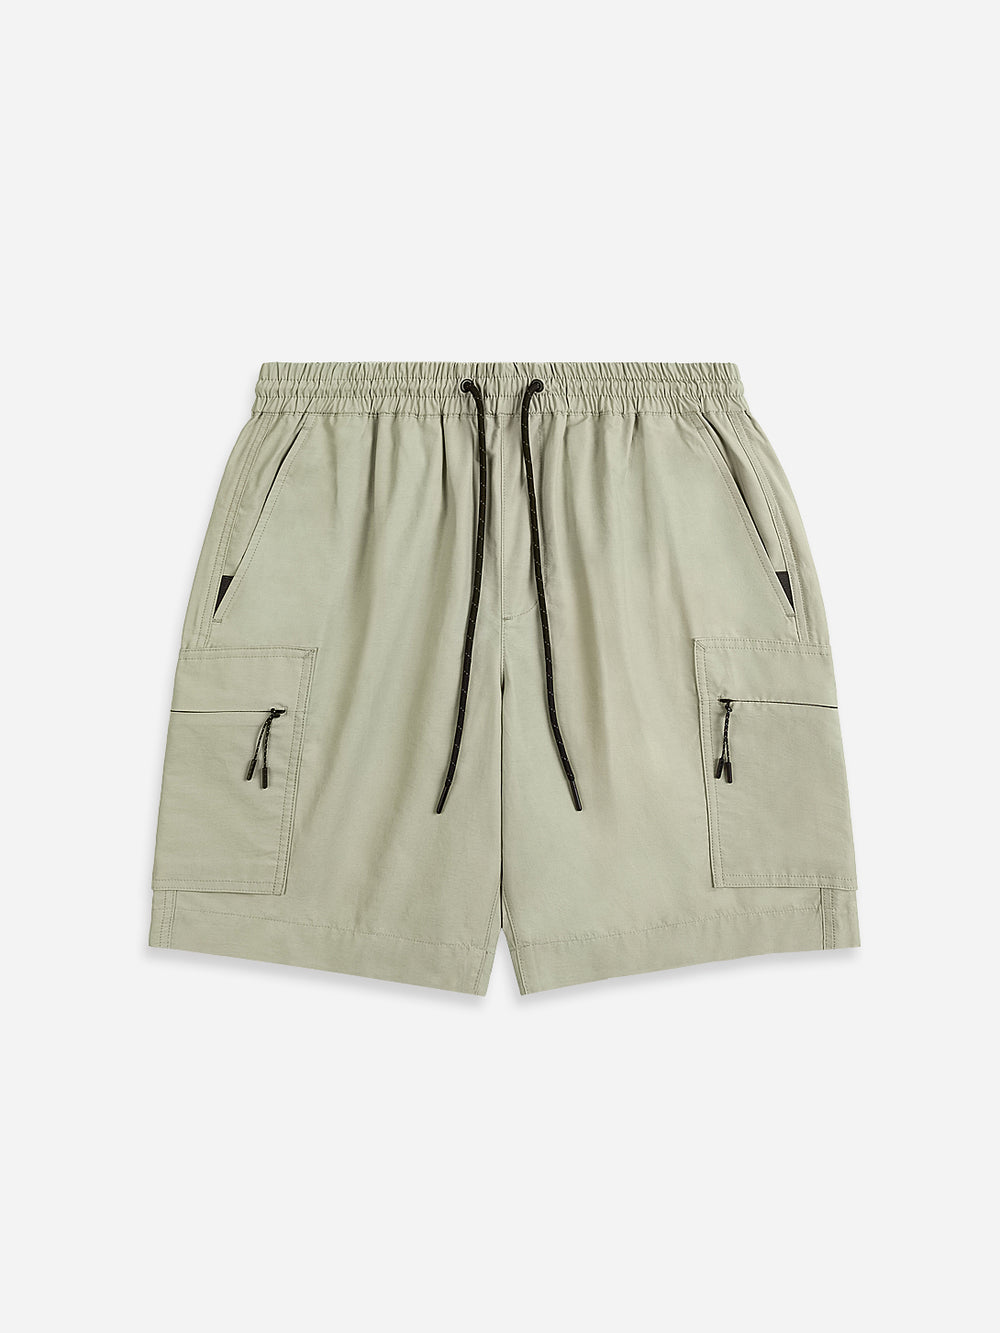 Desert Sage Men's Marlo Cotton Nylon Shorts